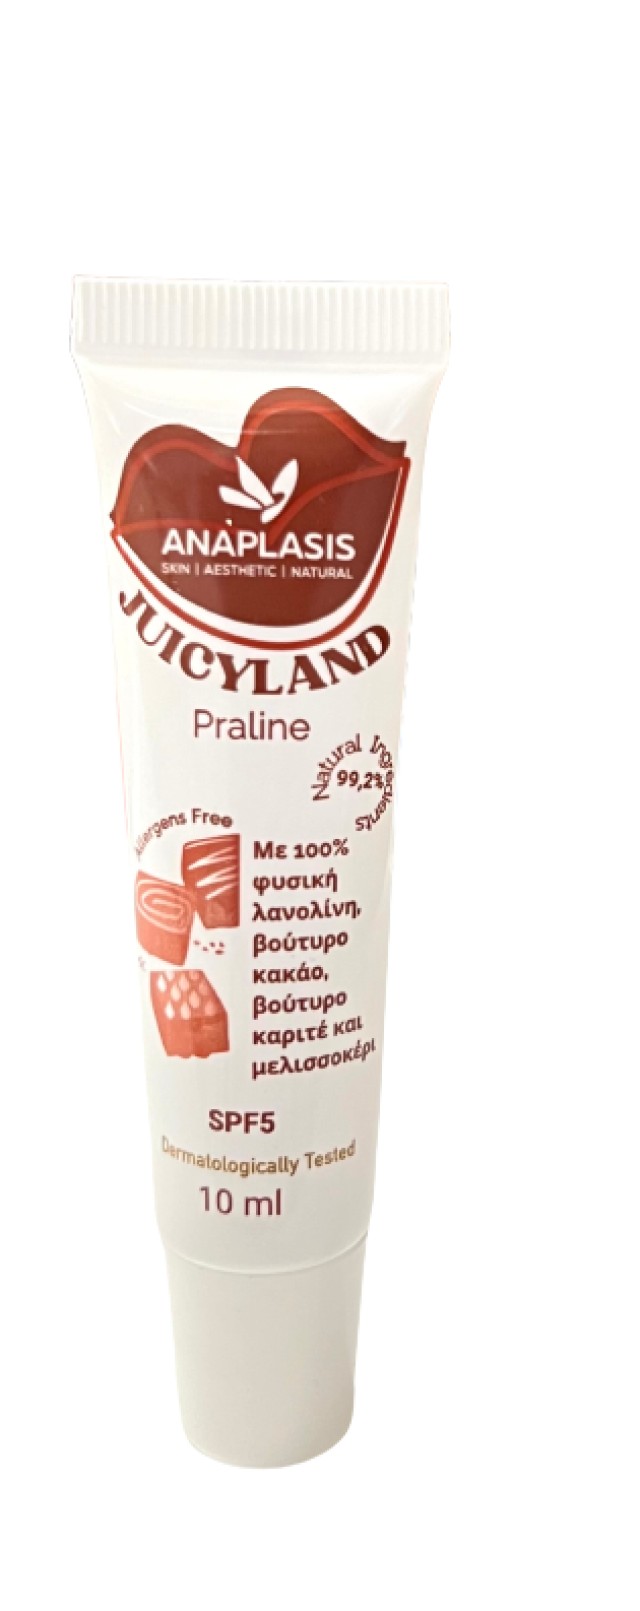 AnaPlasis Juicyland Ενυδατικό Lip Balm Praline SPF5 με Αντηλιακή Προστασία 10ml